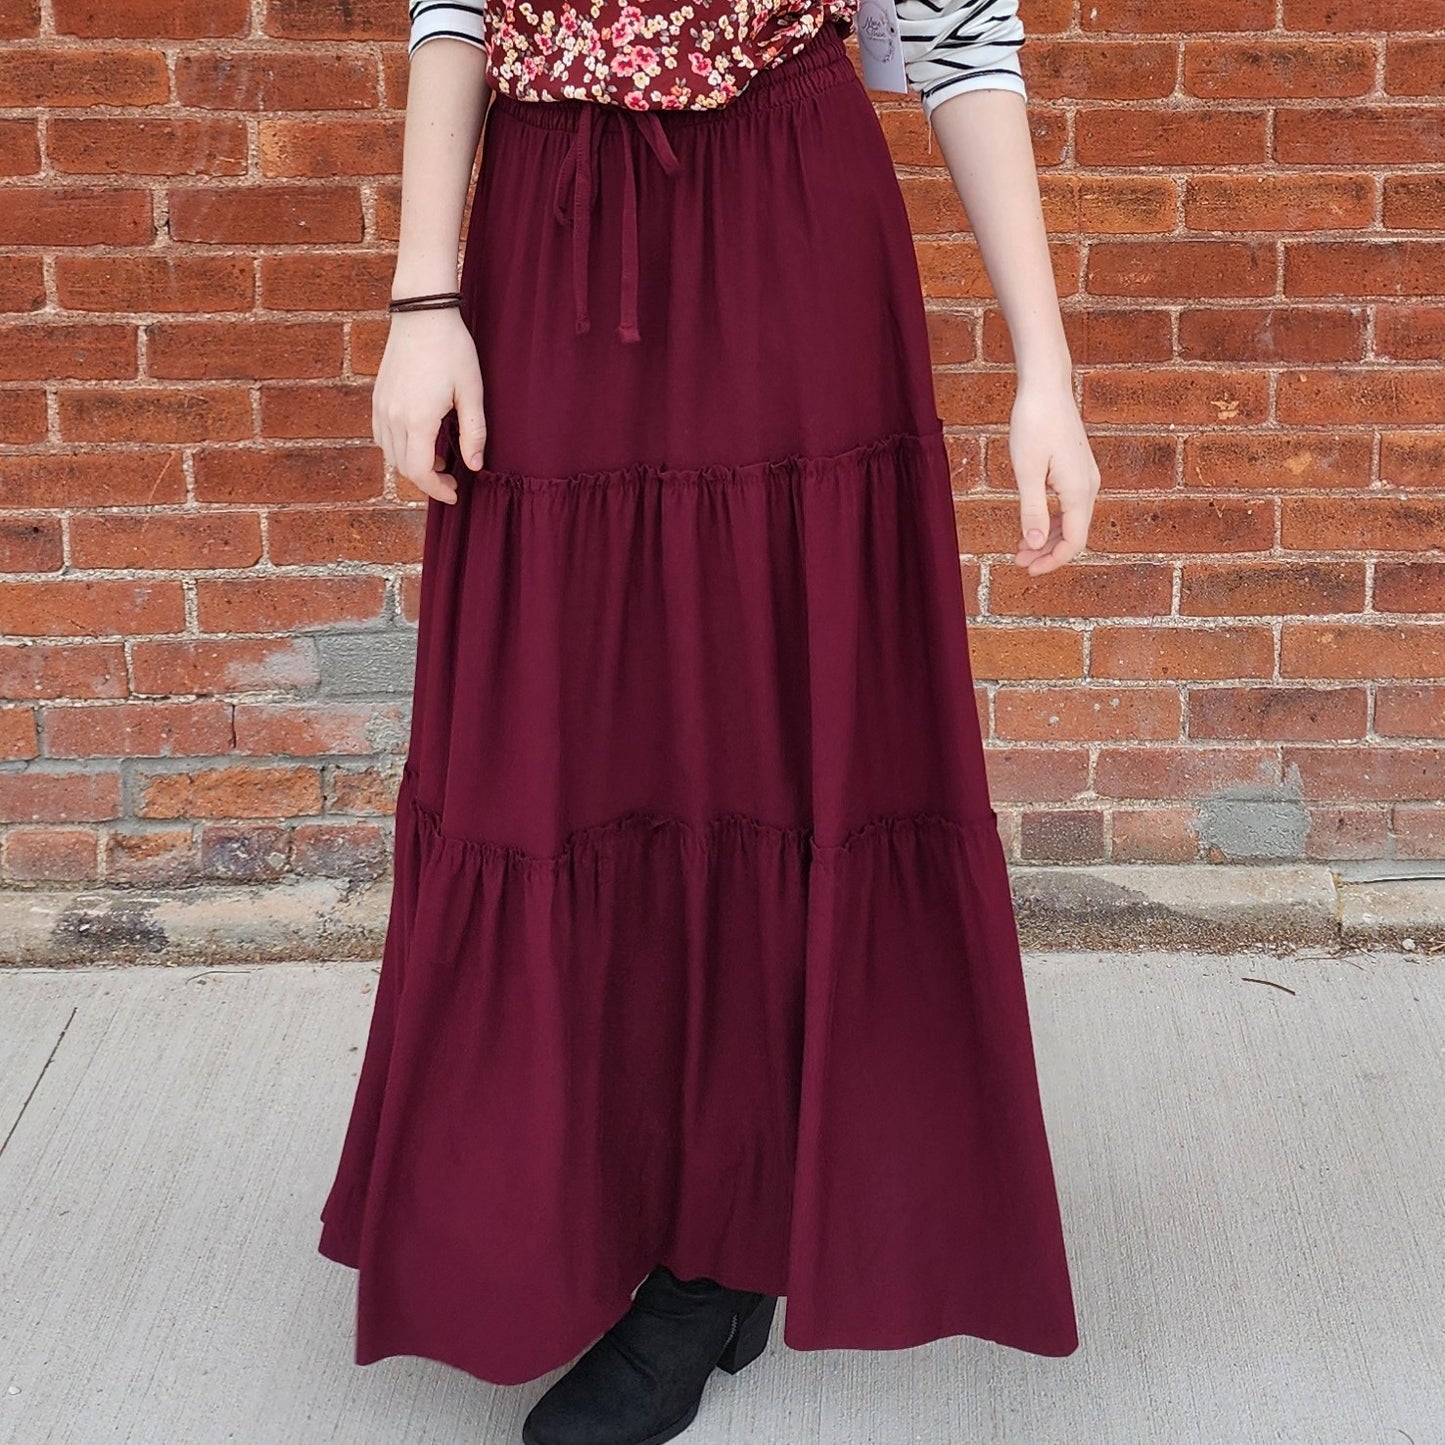 Burgundy Tiered Skirt